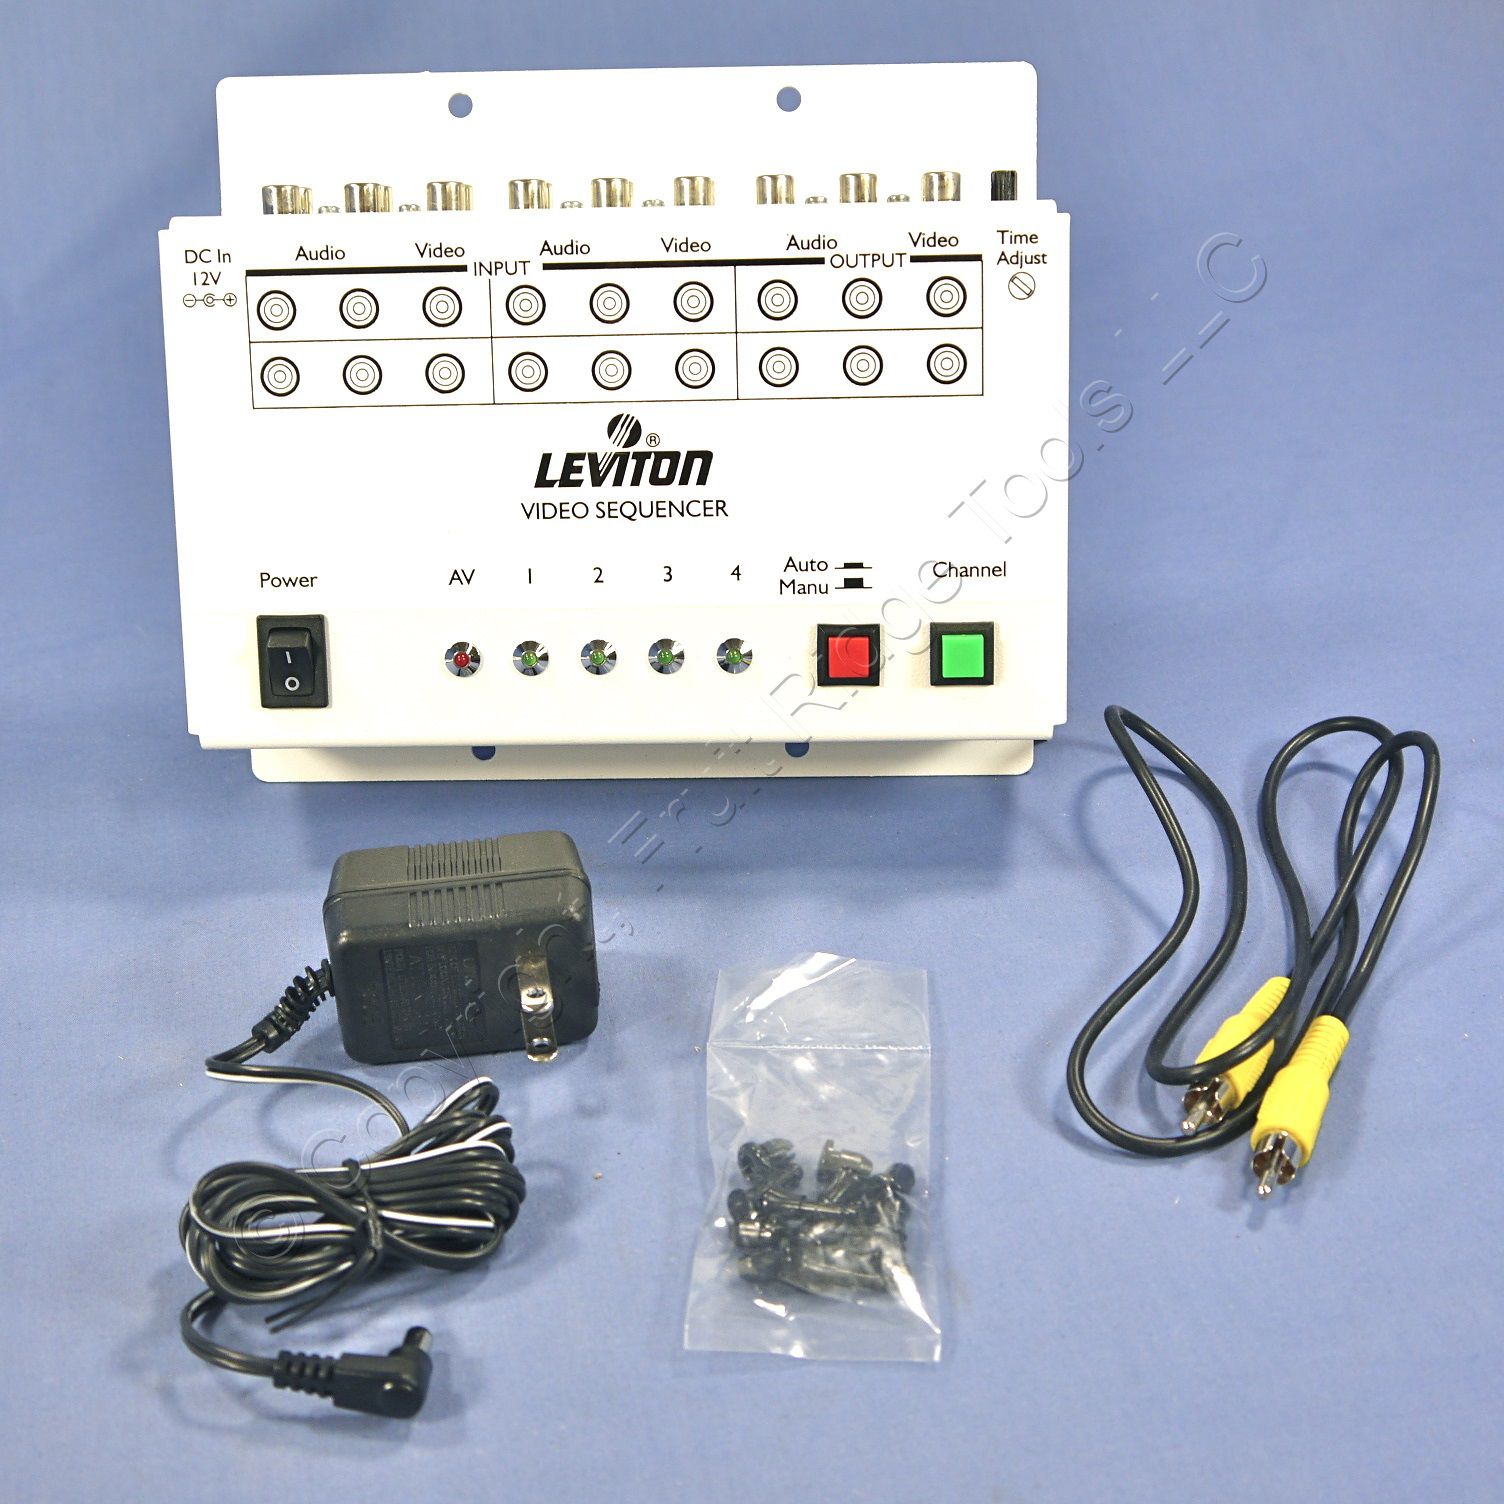 leviton smc structured media center video sequencer module 48213